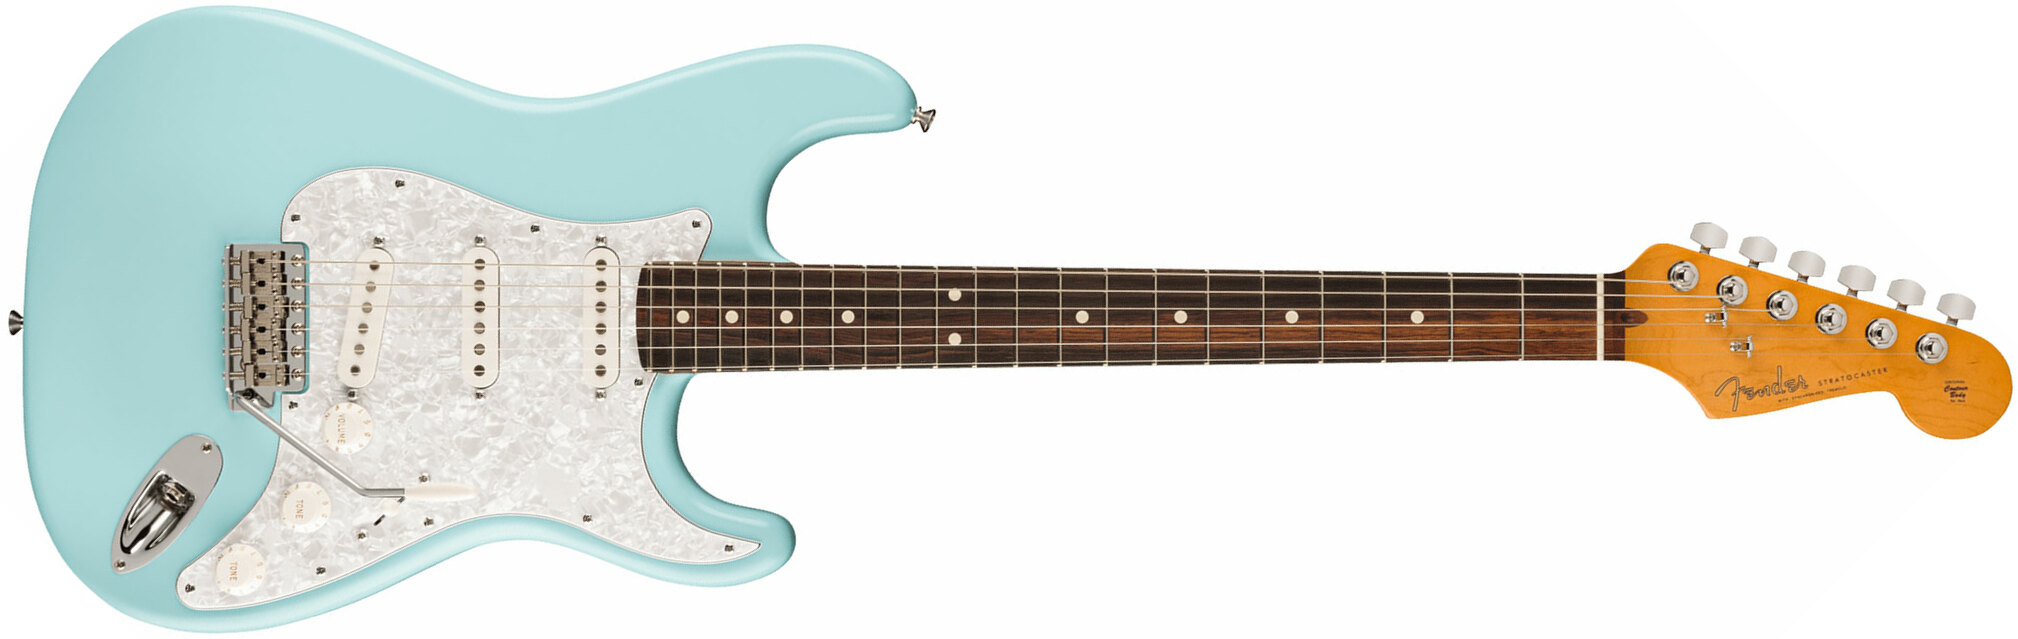 Fender Cory Wong Strat Ltd Signature Usa Stss Trem Rw - Daphne Blue - Str shape electric guitar - Main picture